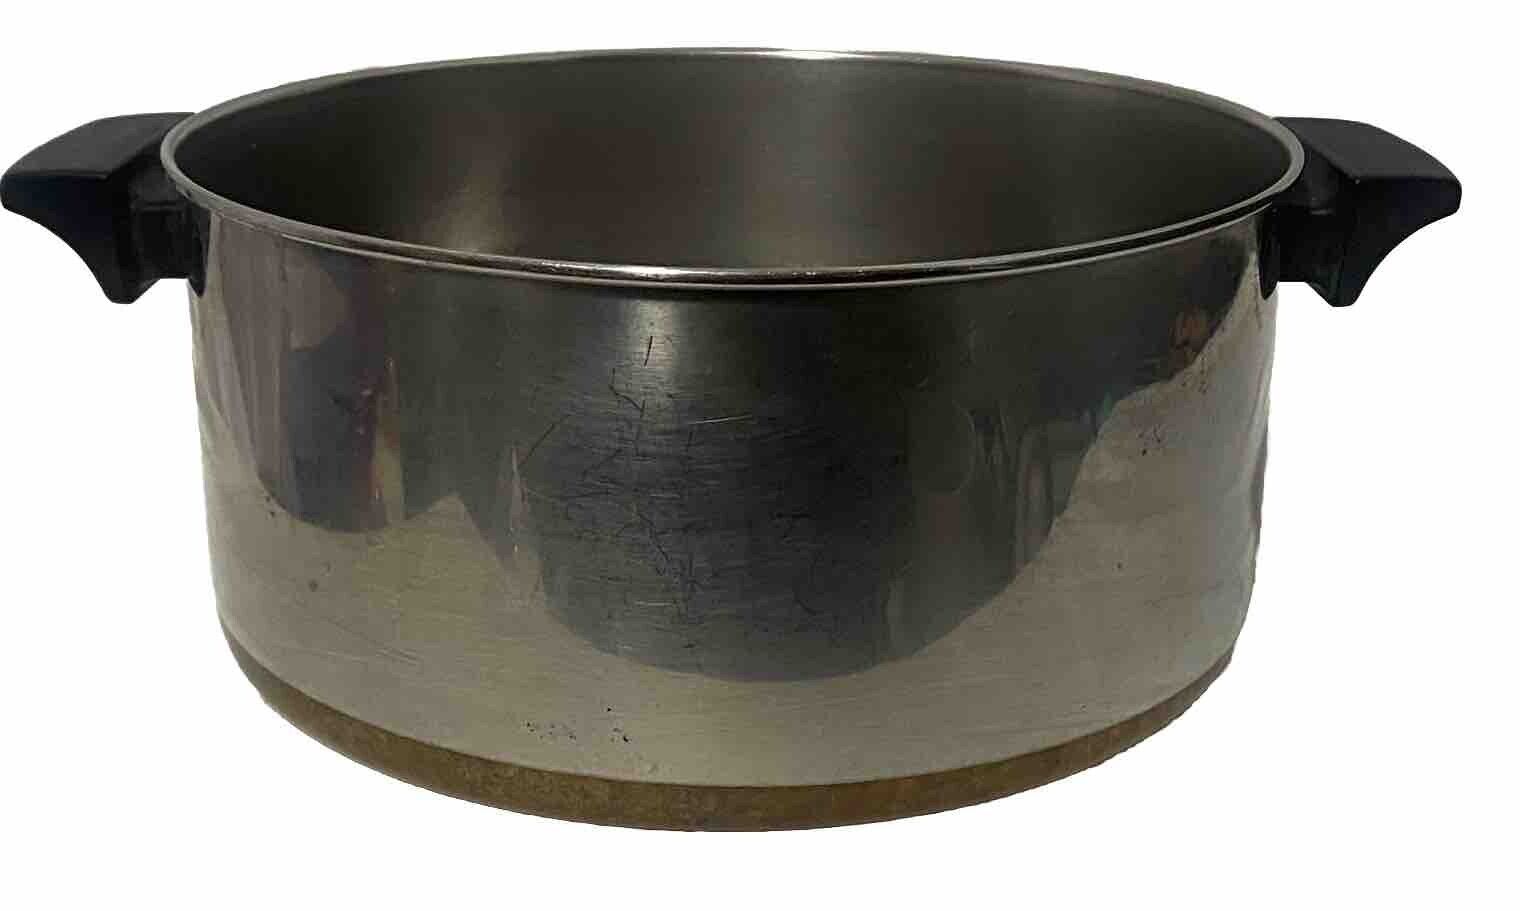 Vintage Revere Ware 1801 6 Qt. STOCK POT Stainless Steel Copper Bottom 80 Rome